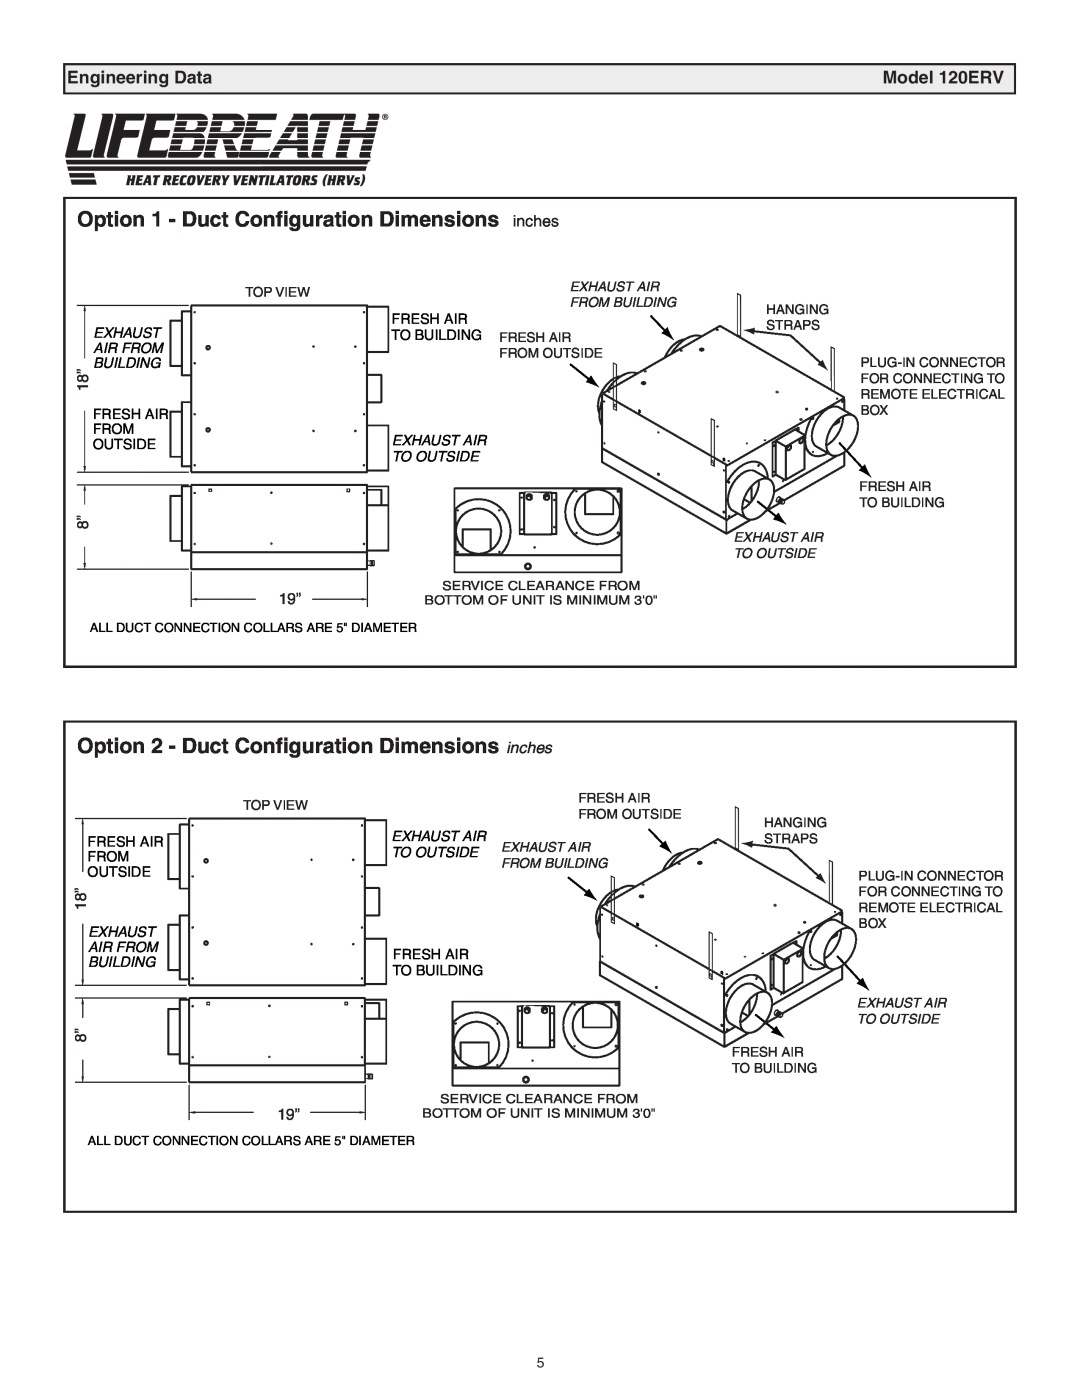 Lifebreath Option 1 - Duct Configuration Dimensions, Option 2 - Duct Configuration Dimensions inches, Model 120ERV 